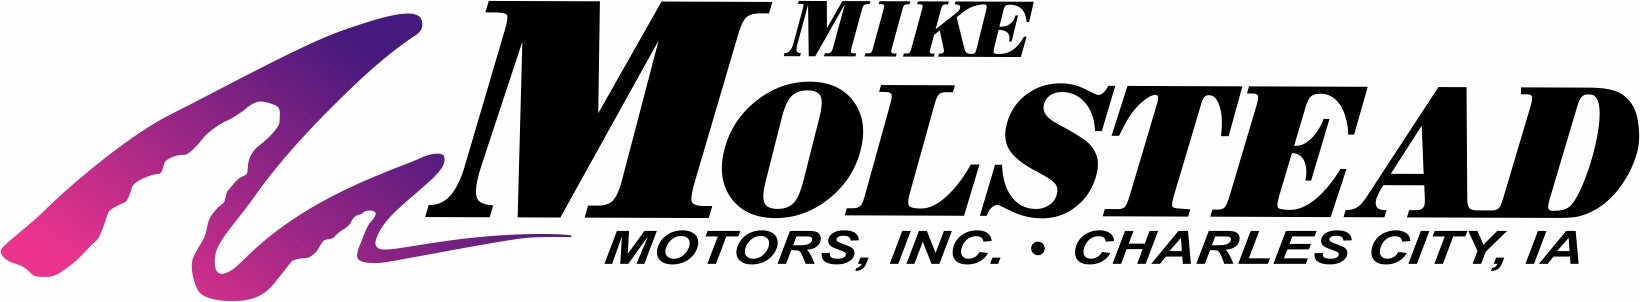 Mike Molstead Motors Charles City, IA